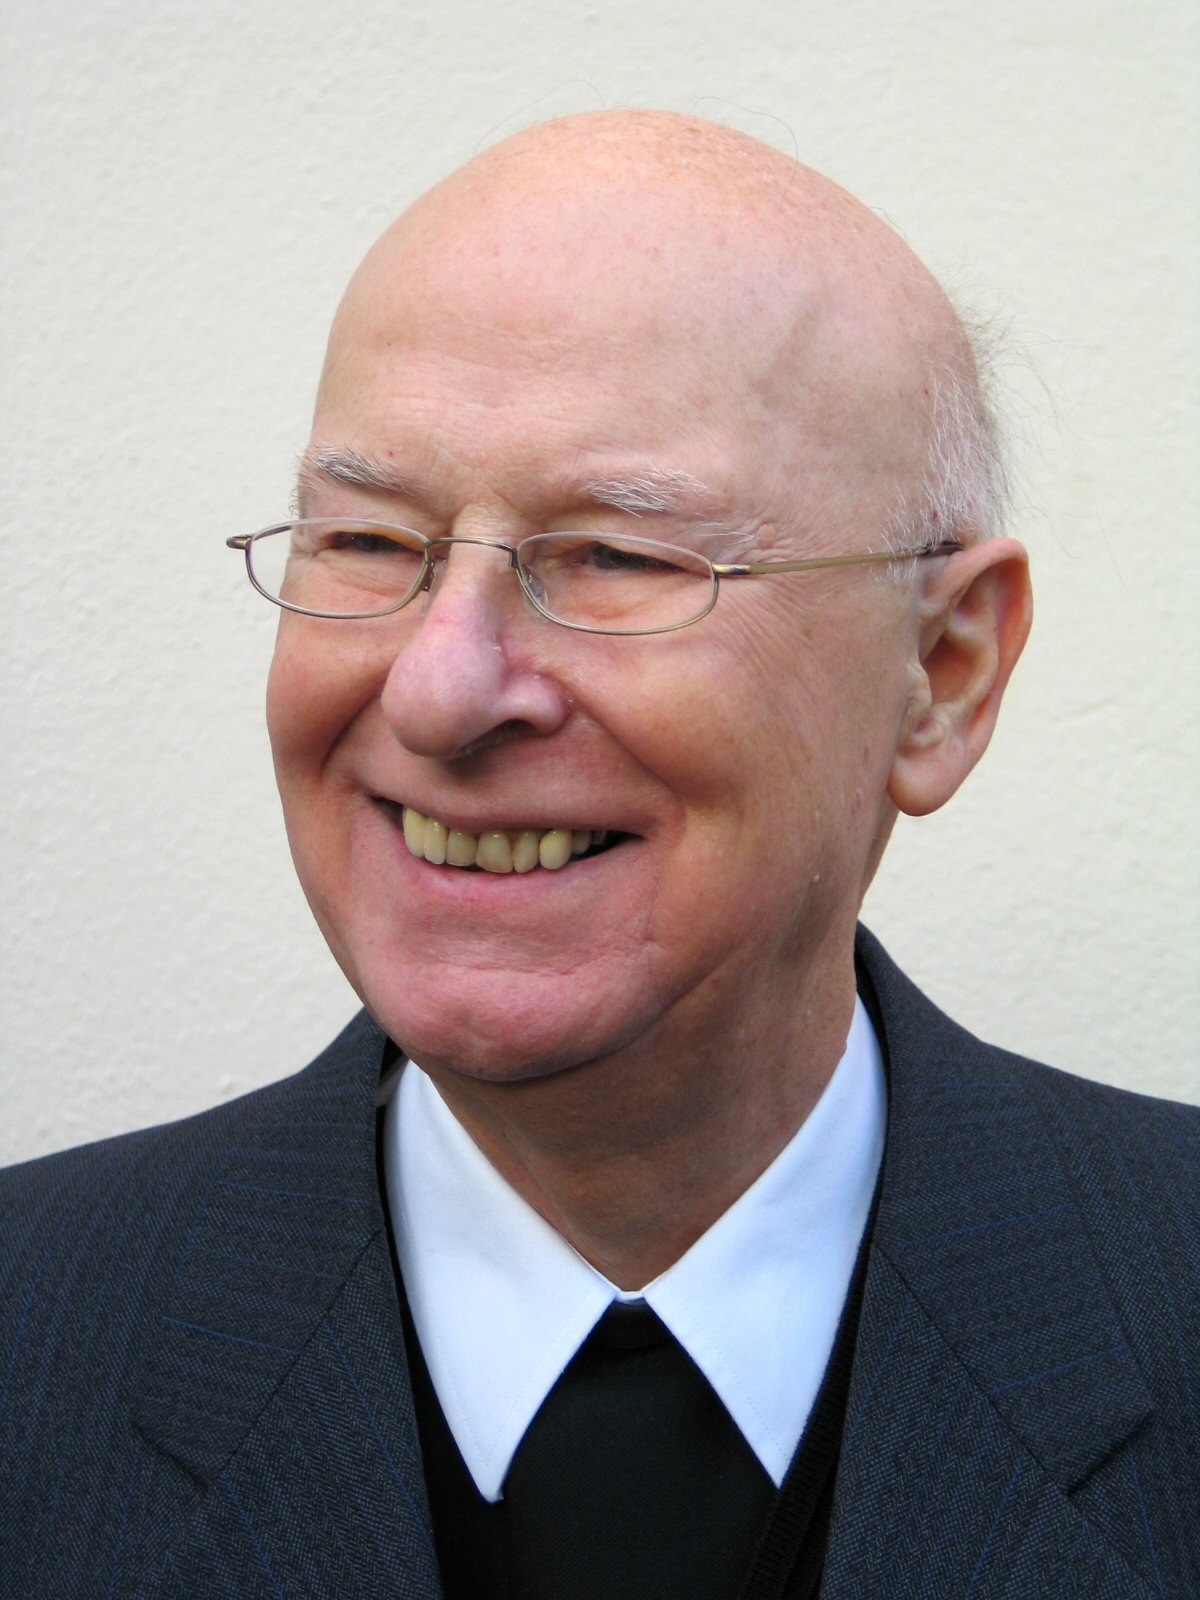 Domkapitular em. Ernst Kalb (c) Bistum Mainz / Blum